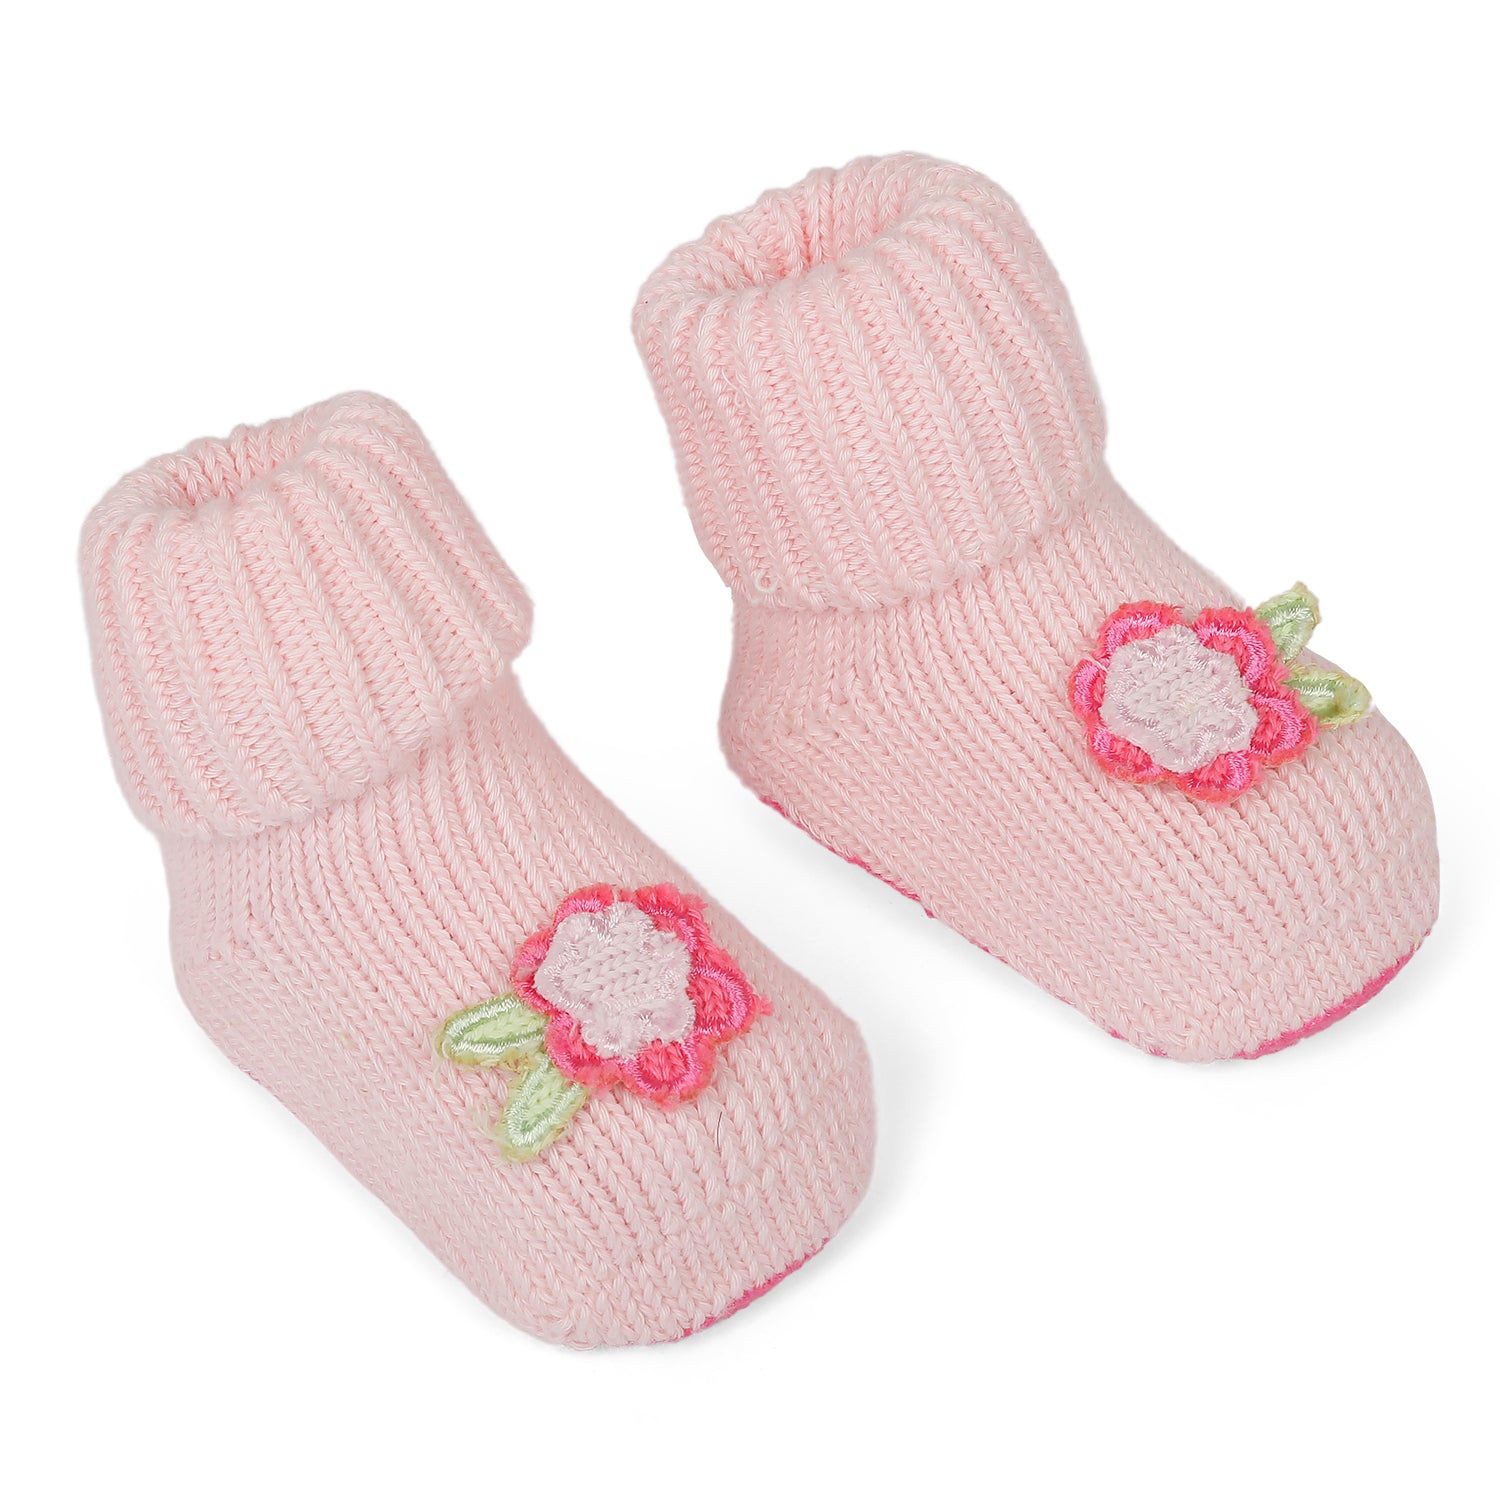 Rosy Newborn Crochet Socks Booties - Pink